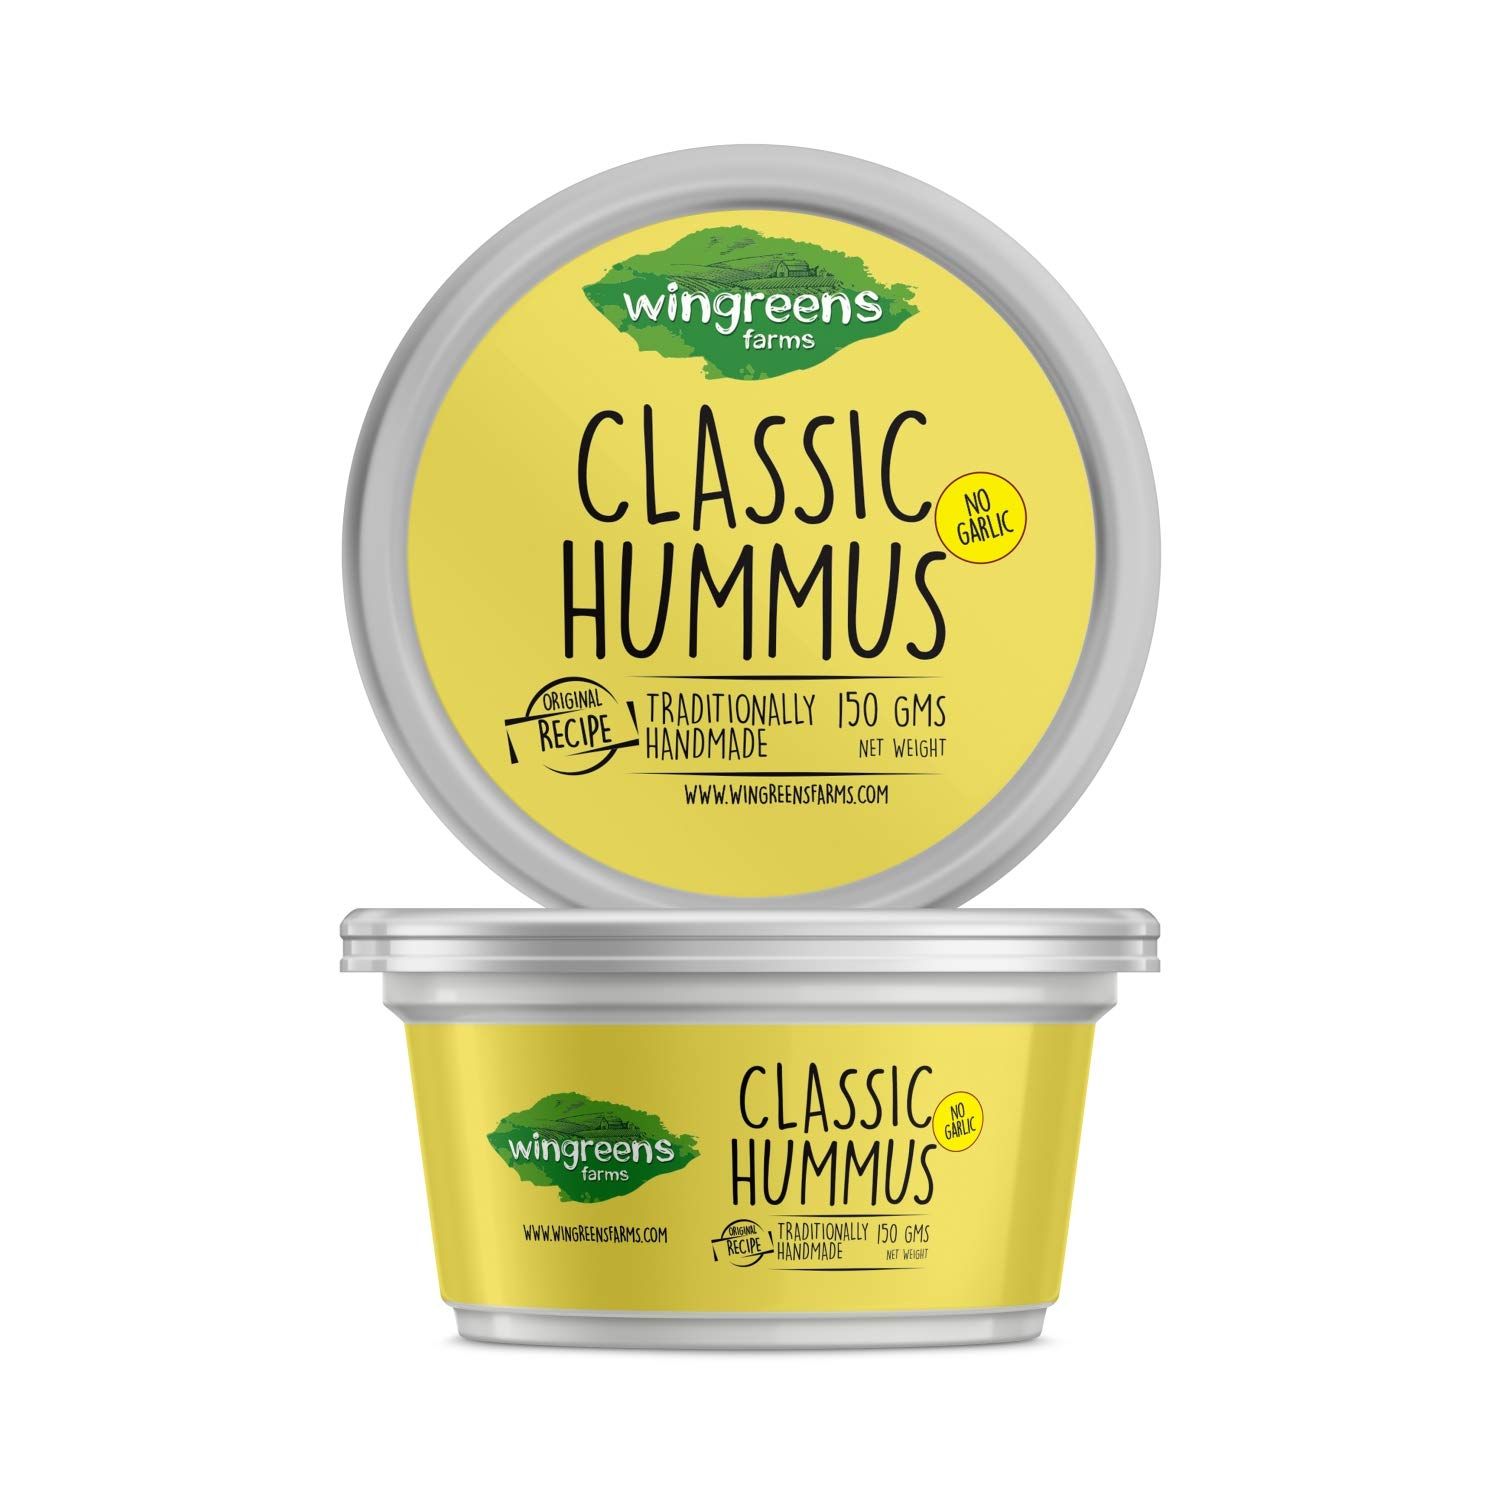 Wingreens Farms Classic Hummus Image